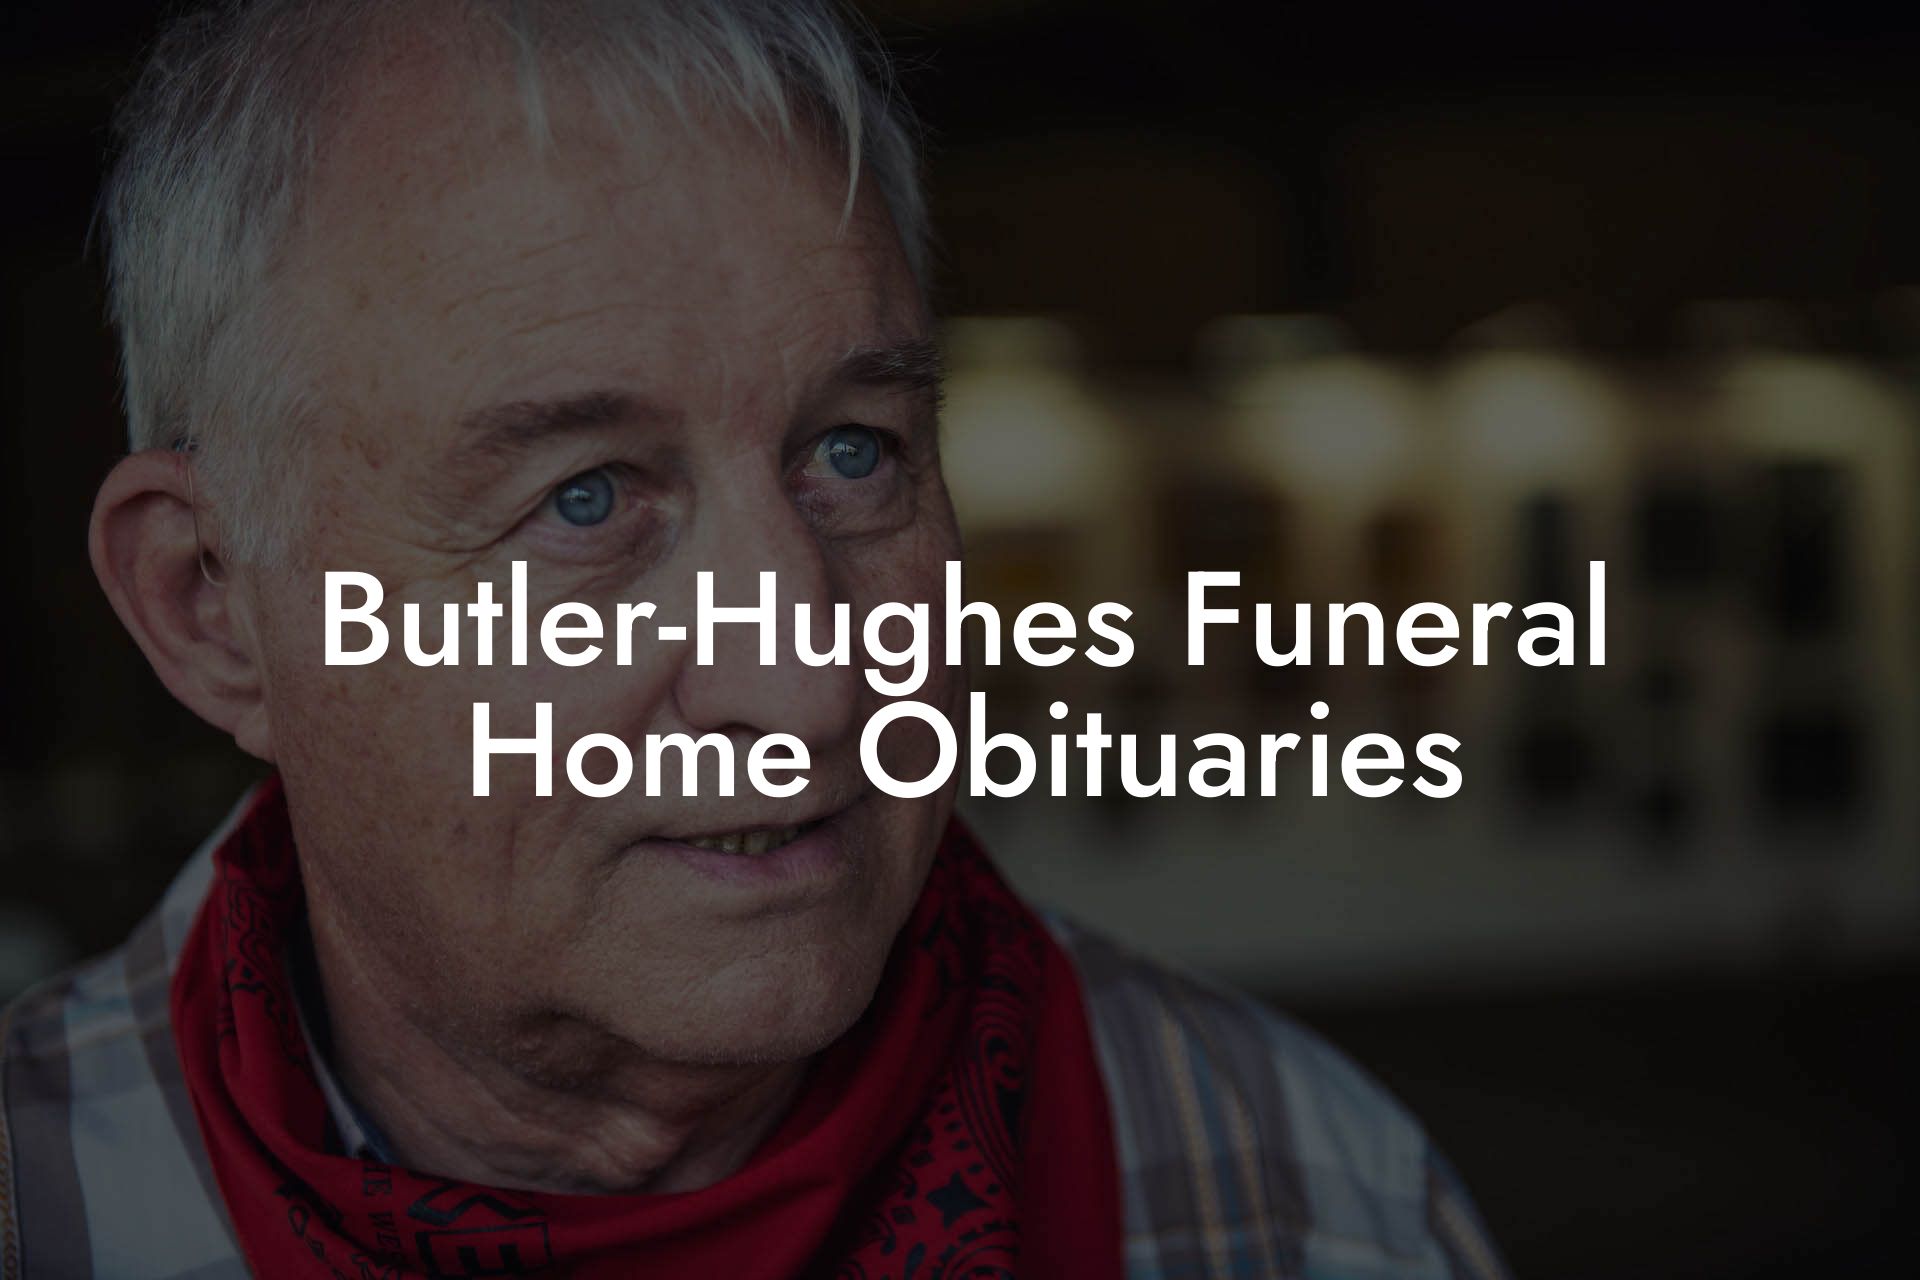 Butler-Hughes Funeral Home Obituaries